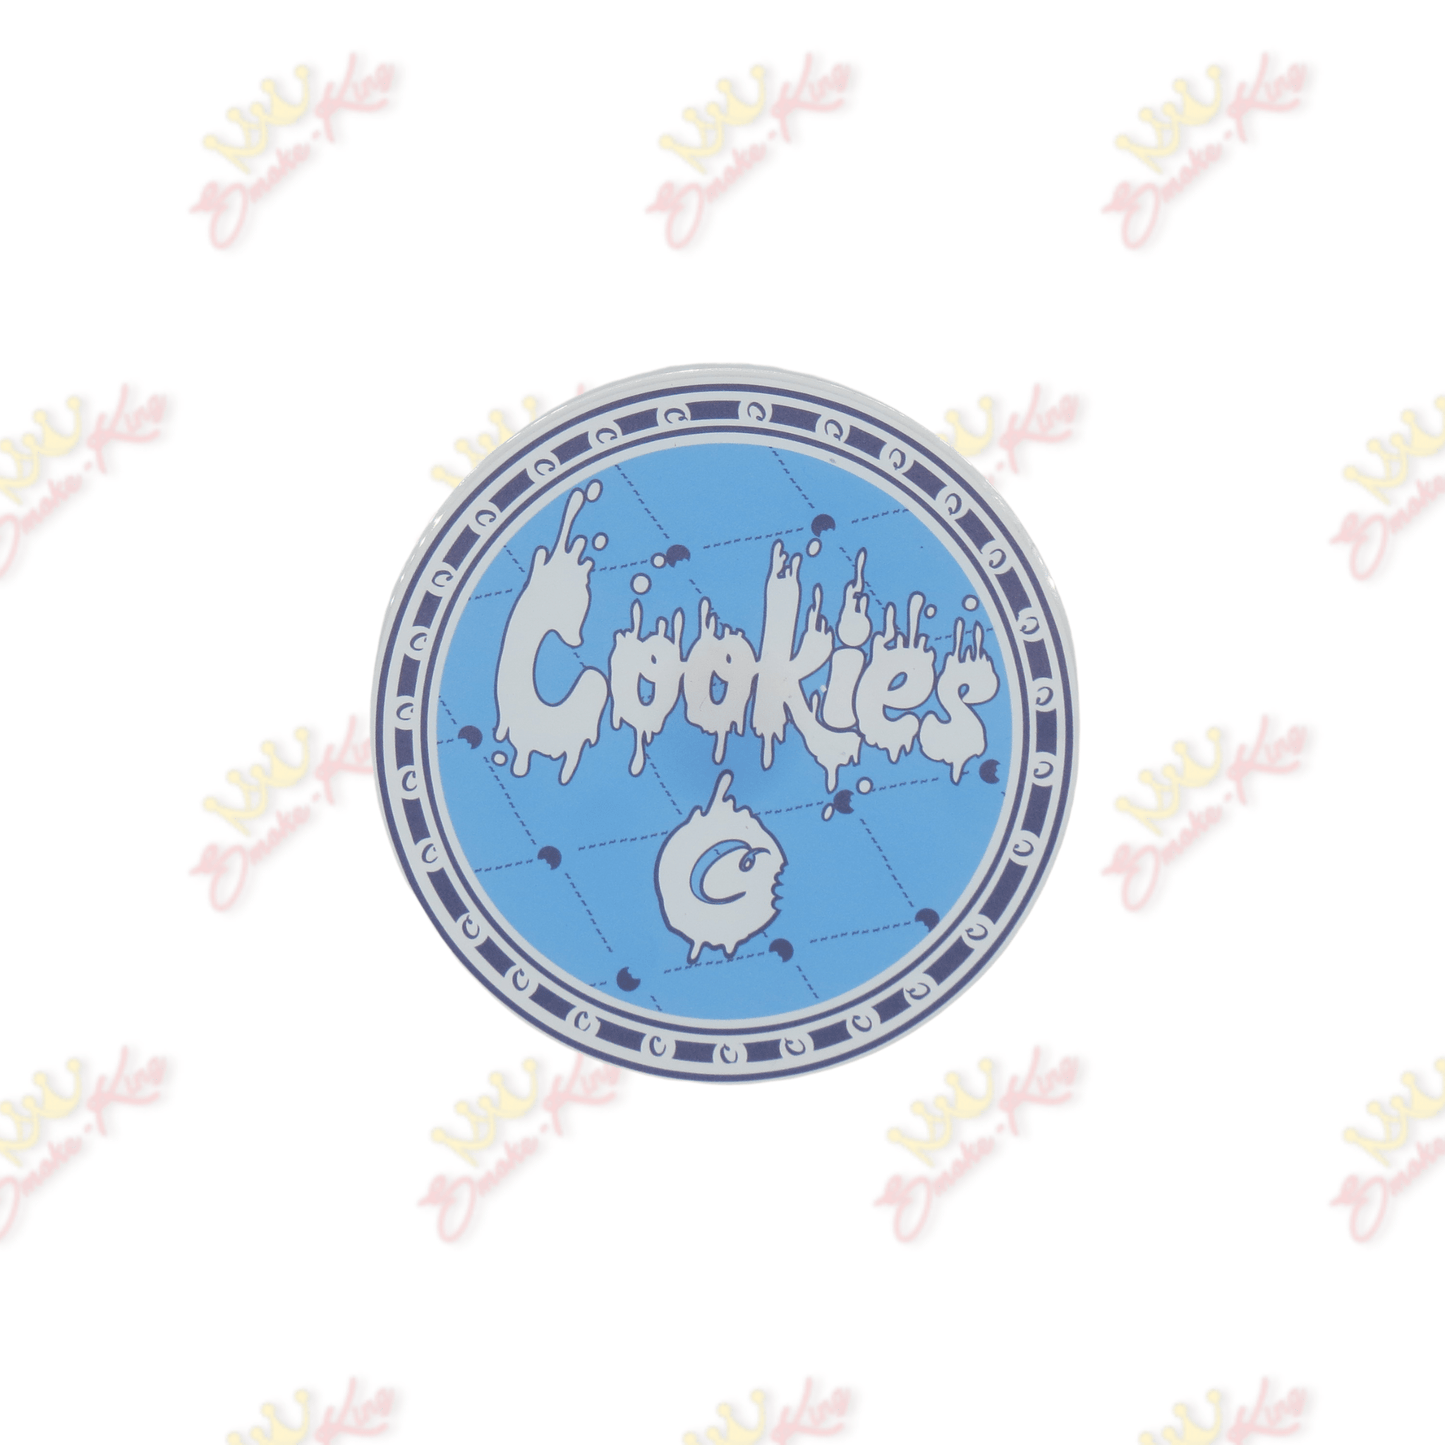 Smokeking dab pads Cookies LED Coaster